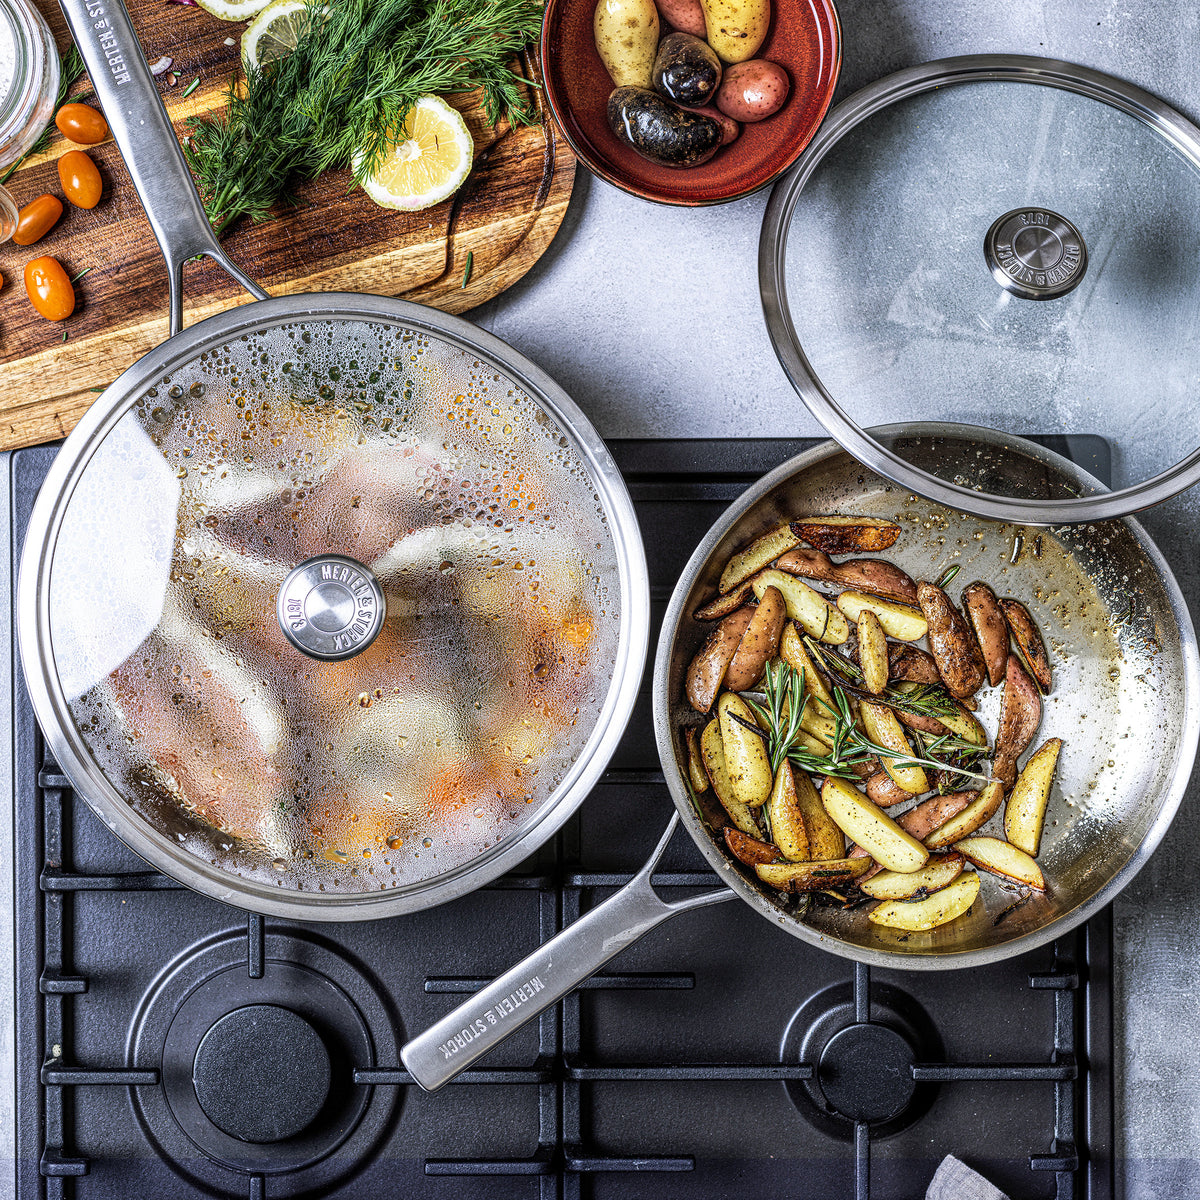 2 Quart Saucepan with Lid, Stainless Steel Pot, Sauce Pan, Cooking